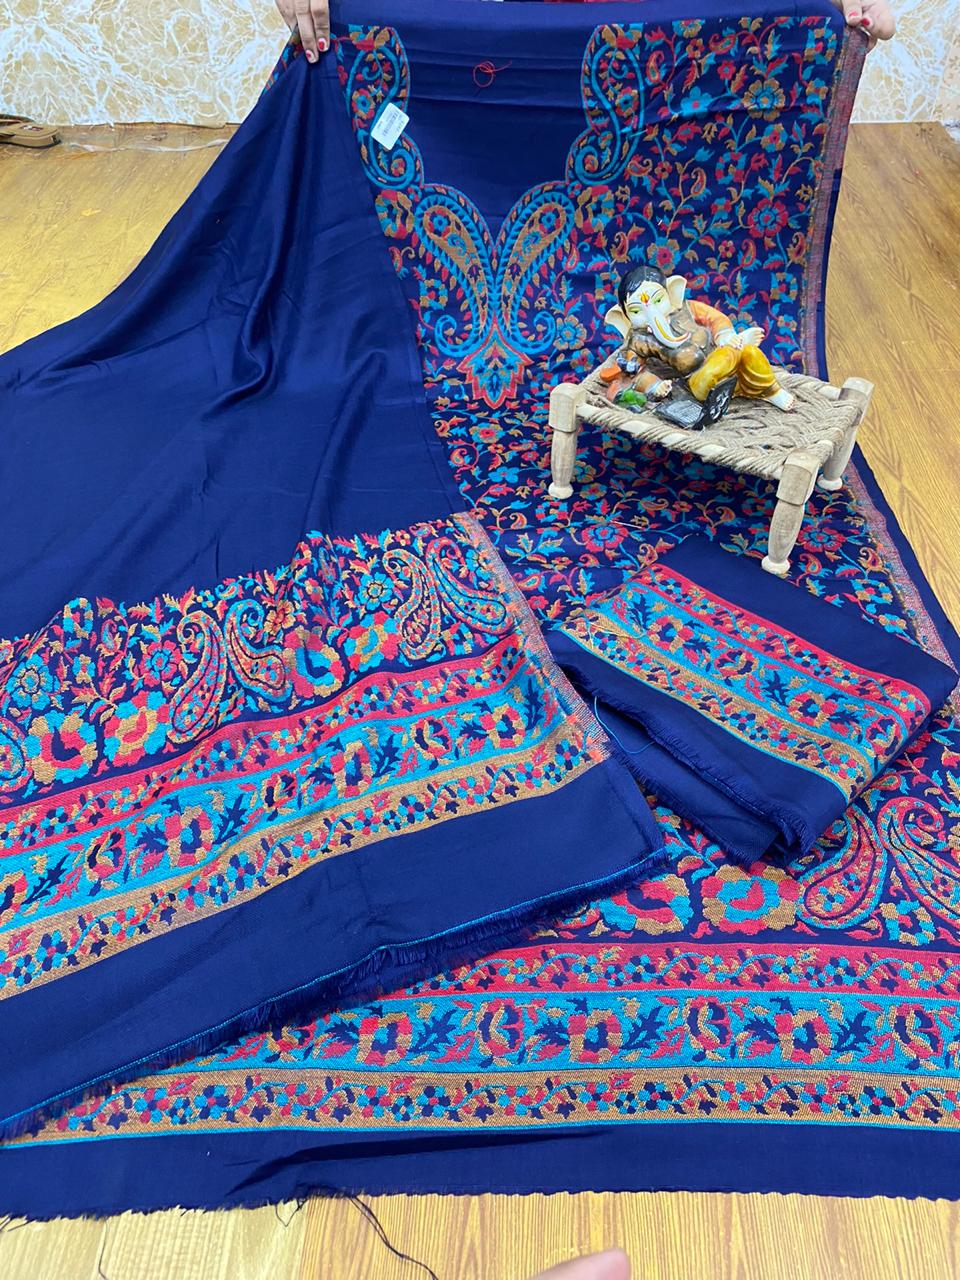 Beautiful and stylish banarsi or jamawar dresses for girls and women/latest  dresses designs 2020 - YouTube